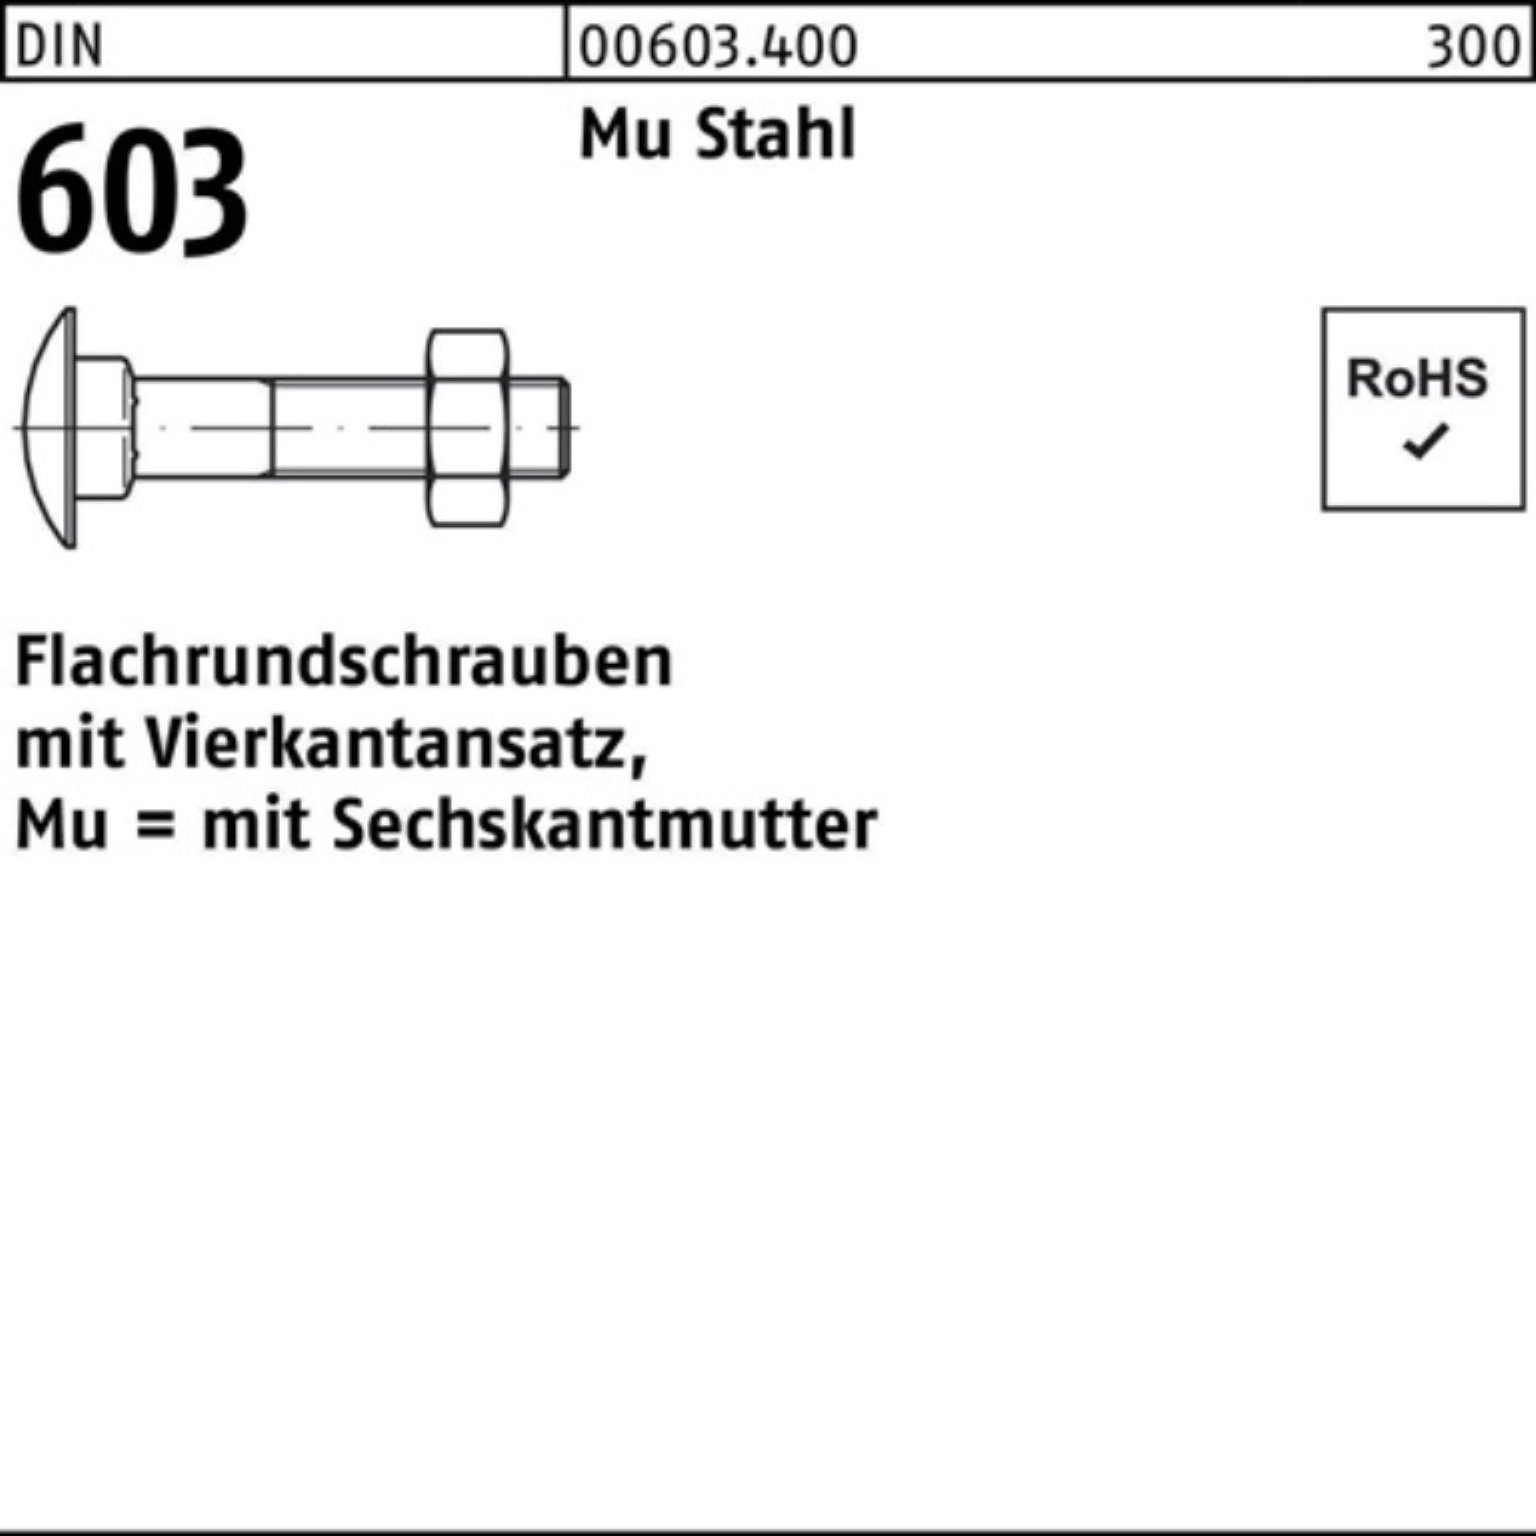 Reyher Schraube 100er DIN Flachrundschraube M16x65 Vierkantansatz/6-ktmutter Pack 603